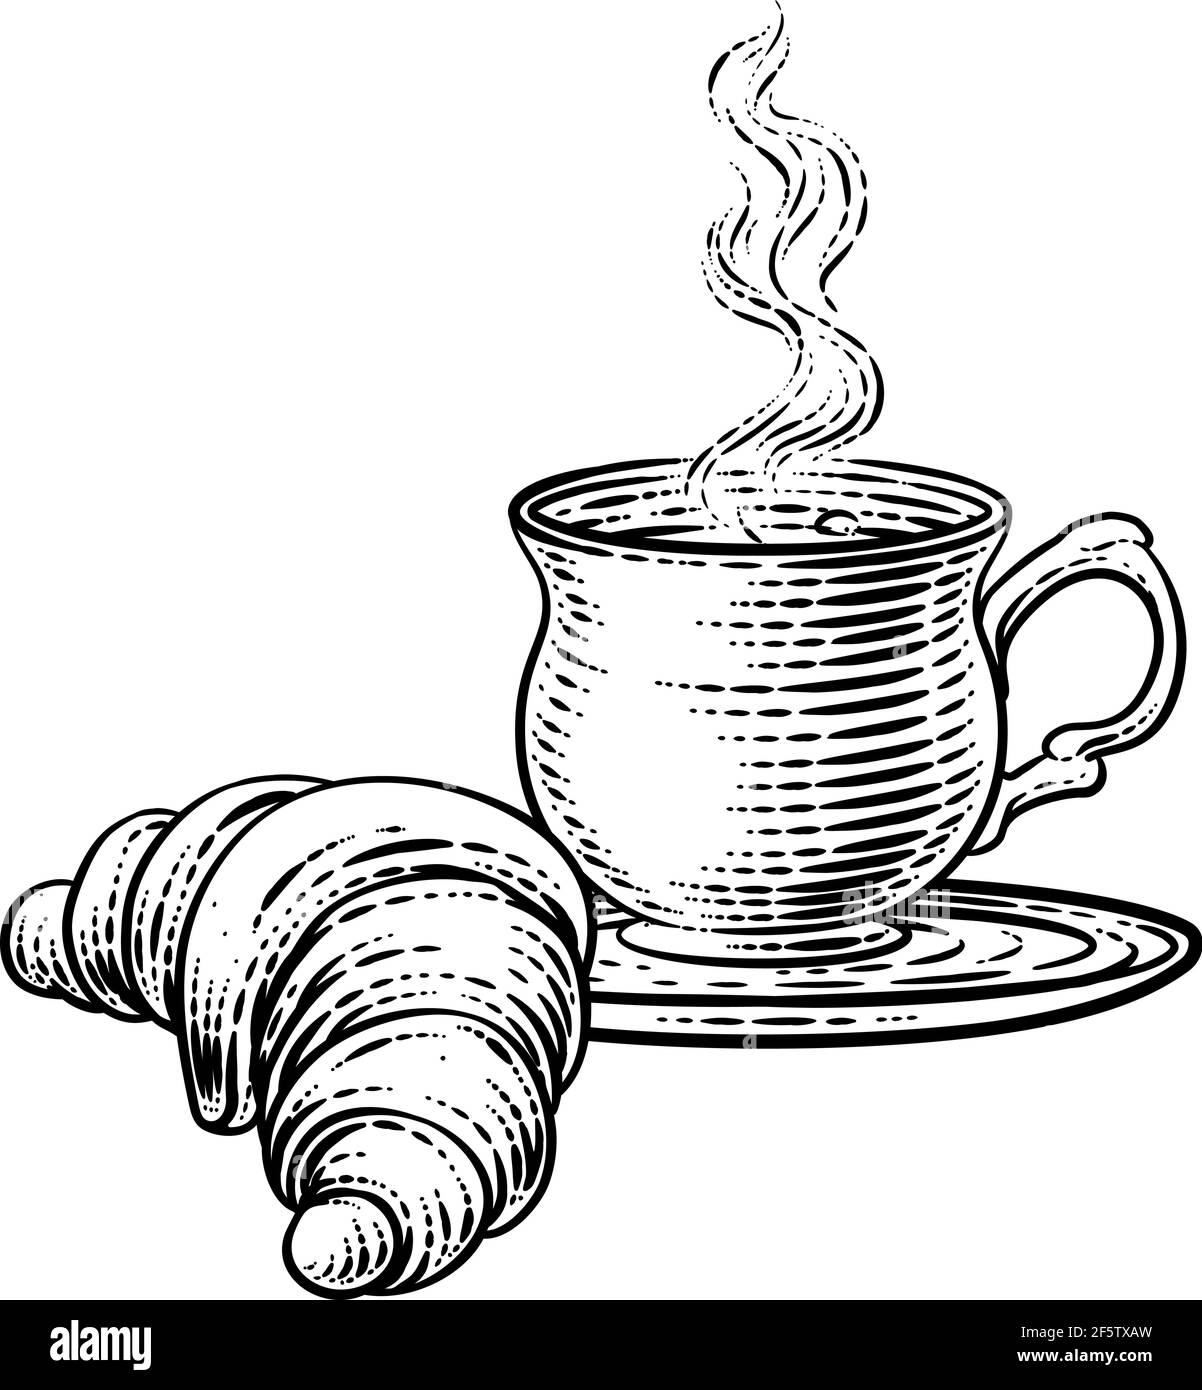 Croissant Und Kaffee Tee Tasse Becher Holzschnitt Stock Vektor